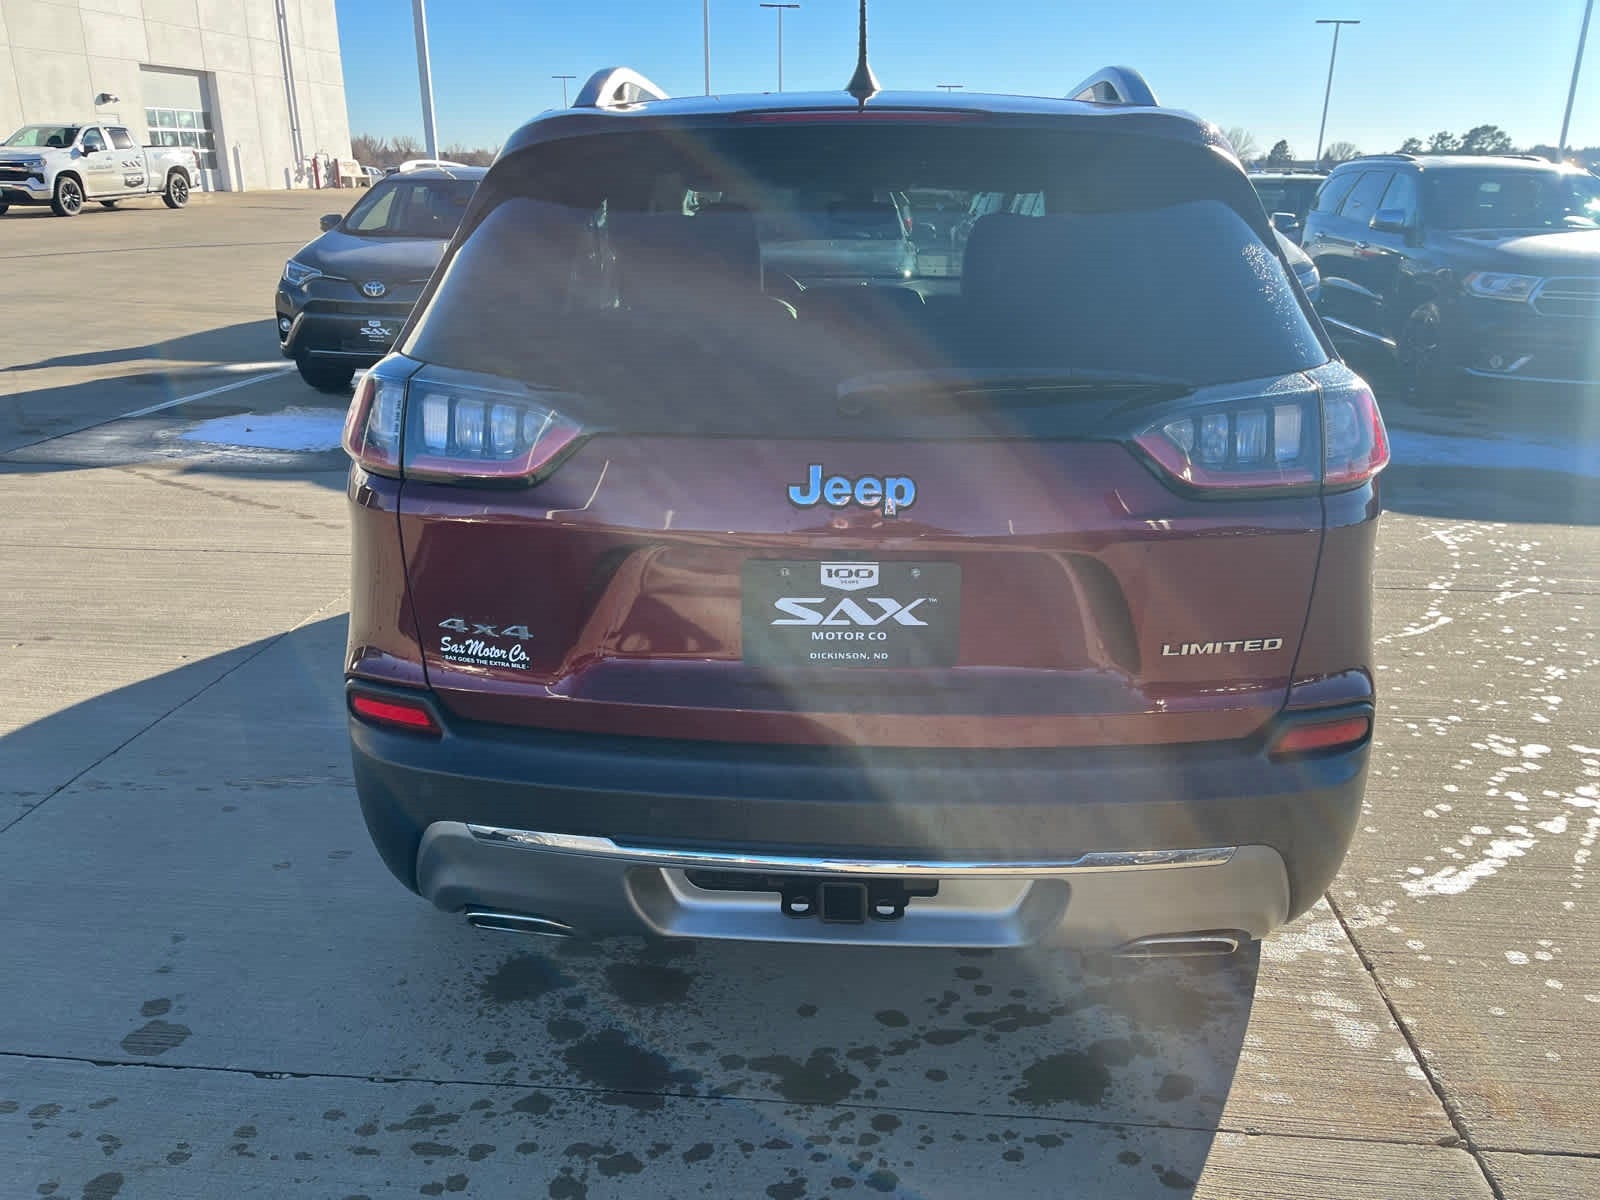 2019 Jeep Cherokee Base